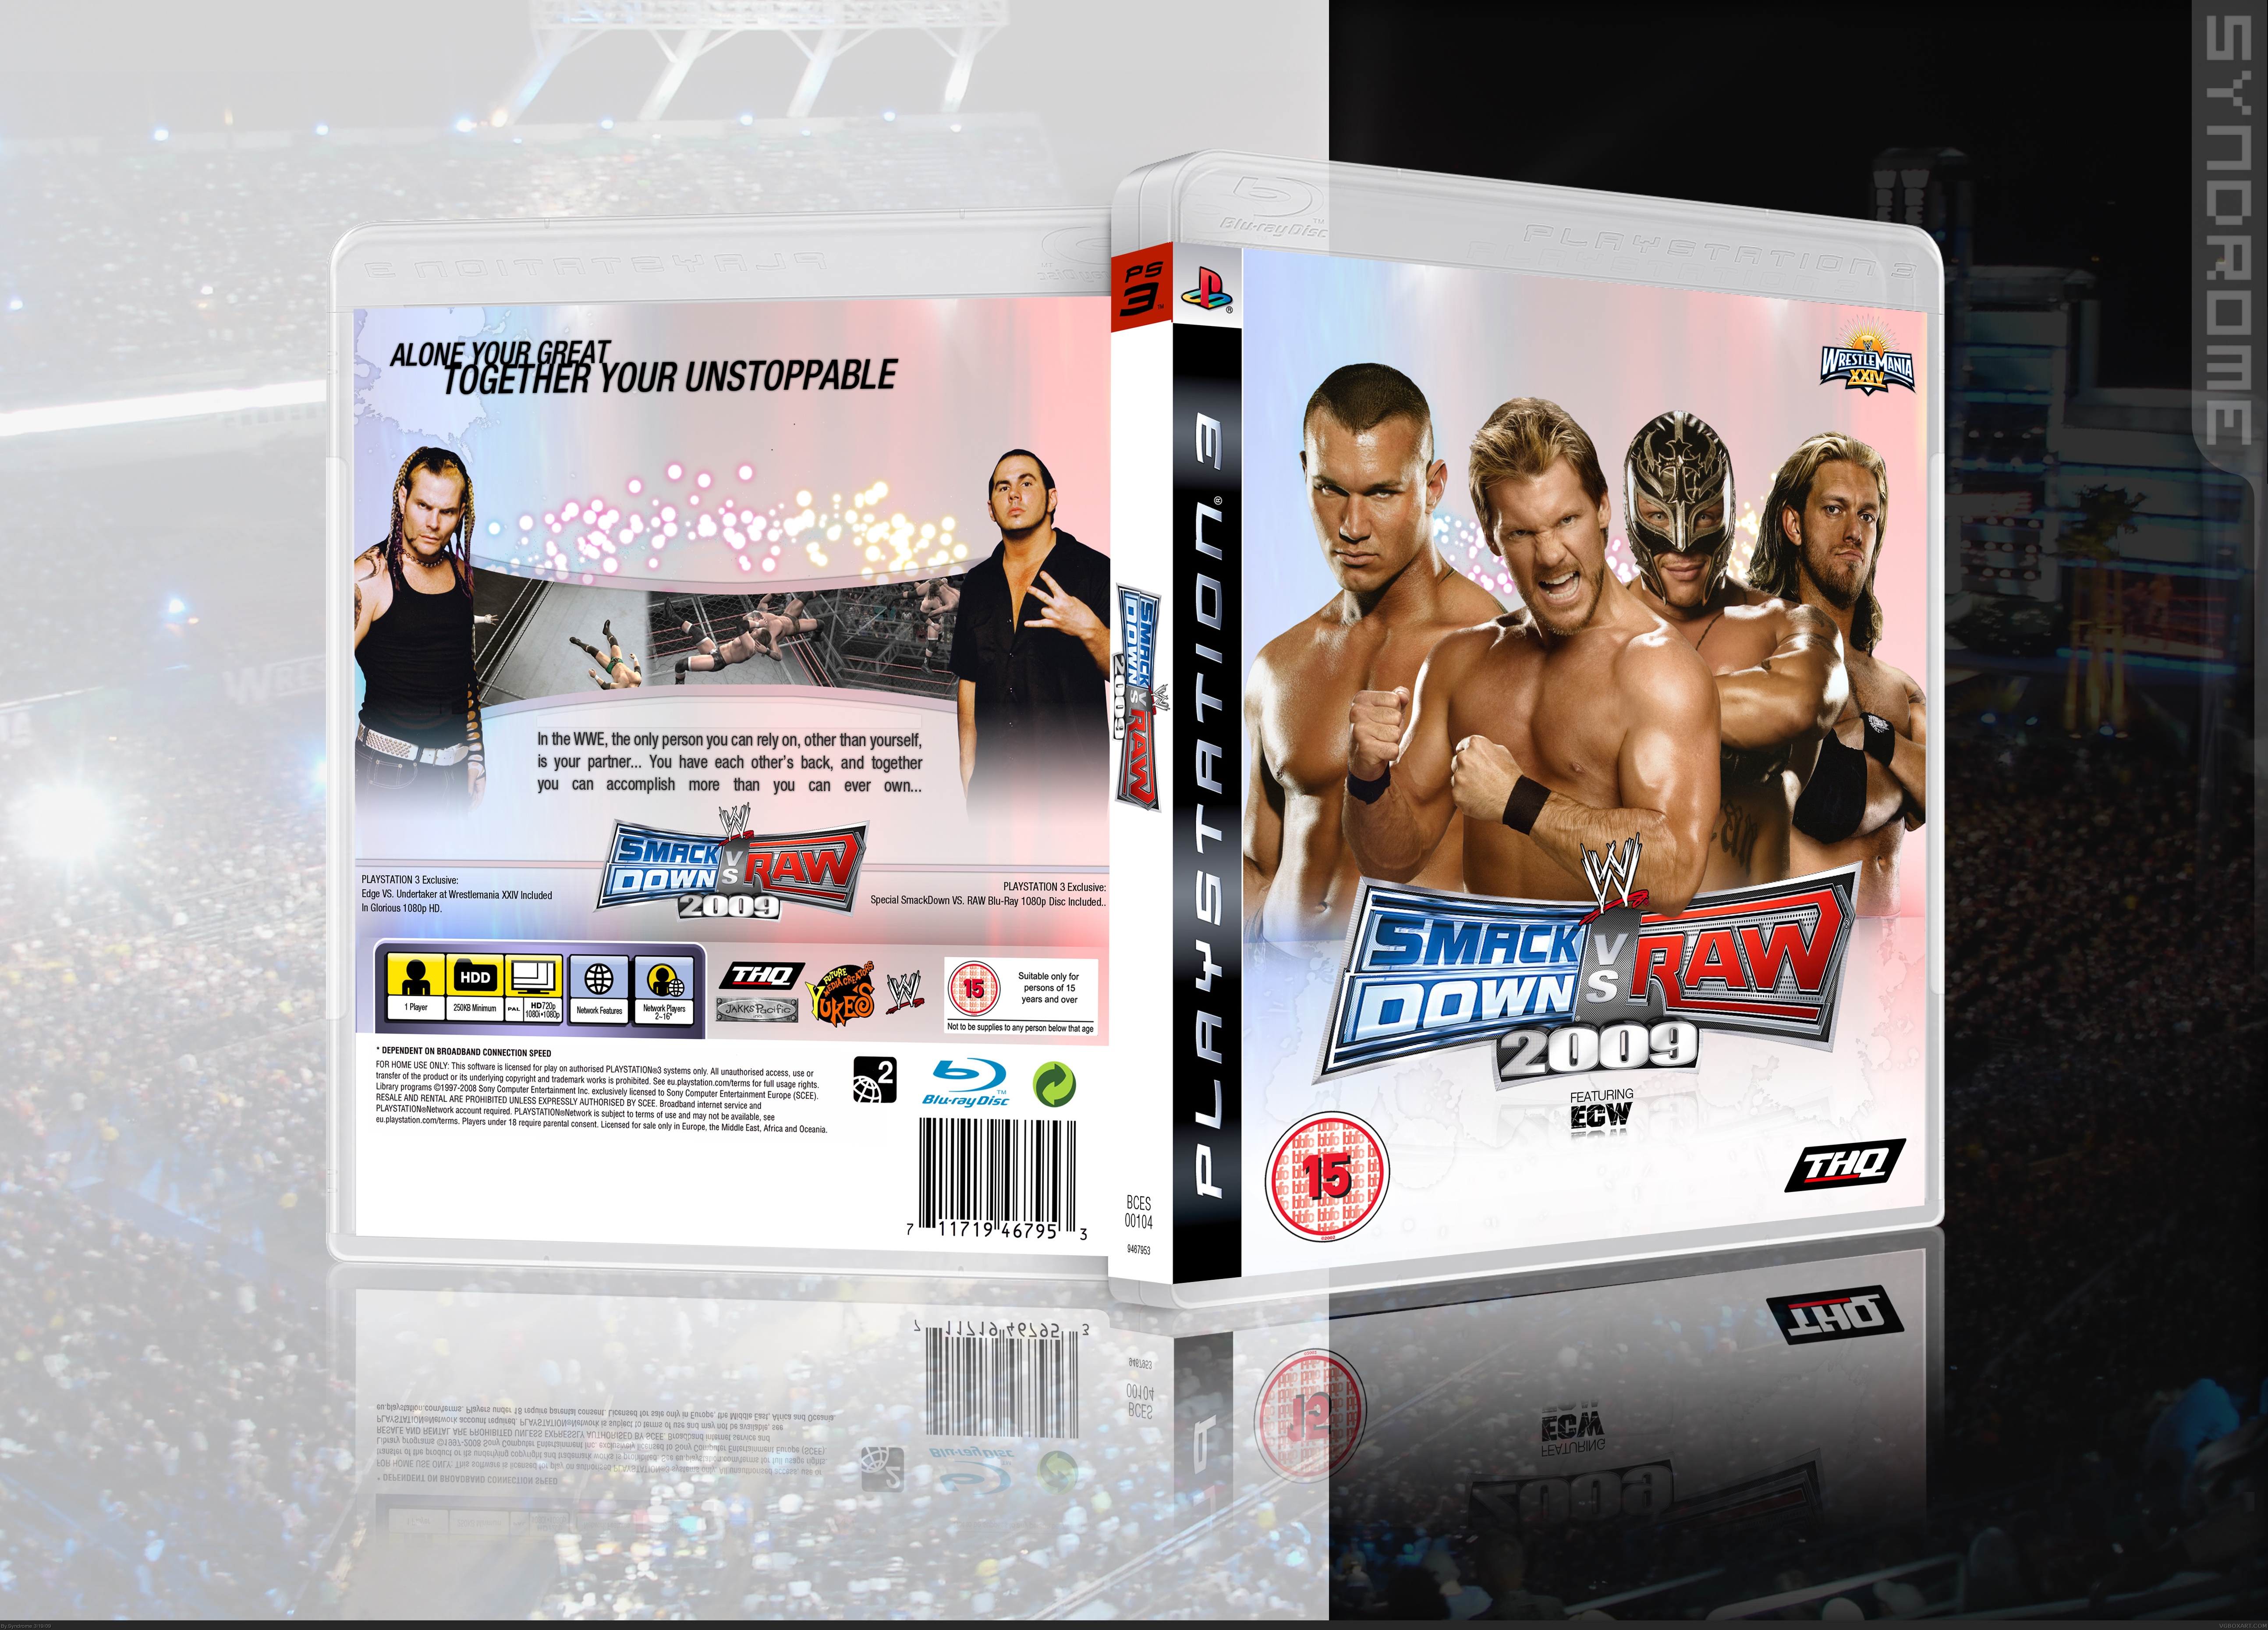 WWE SmackDown vs. Raw 2009 box cover